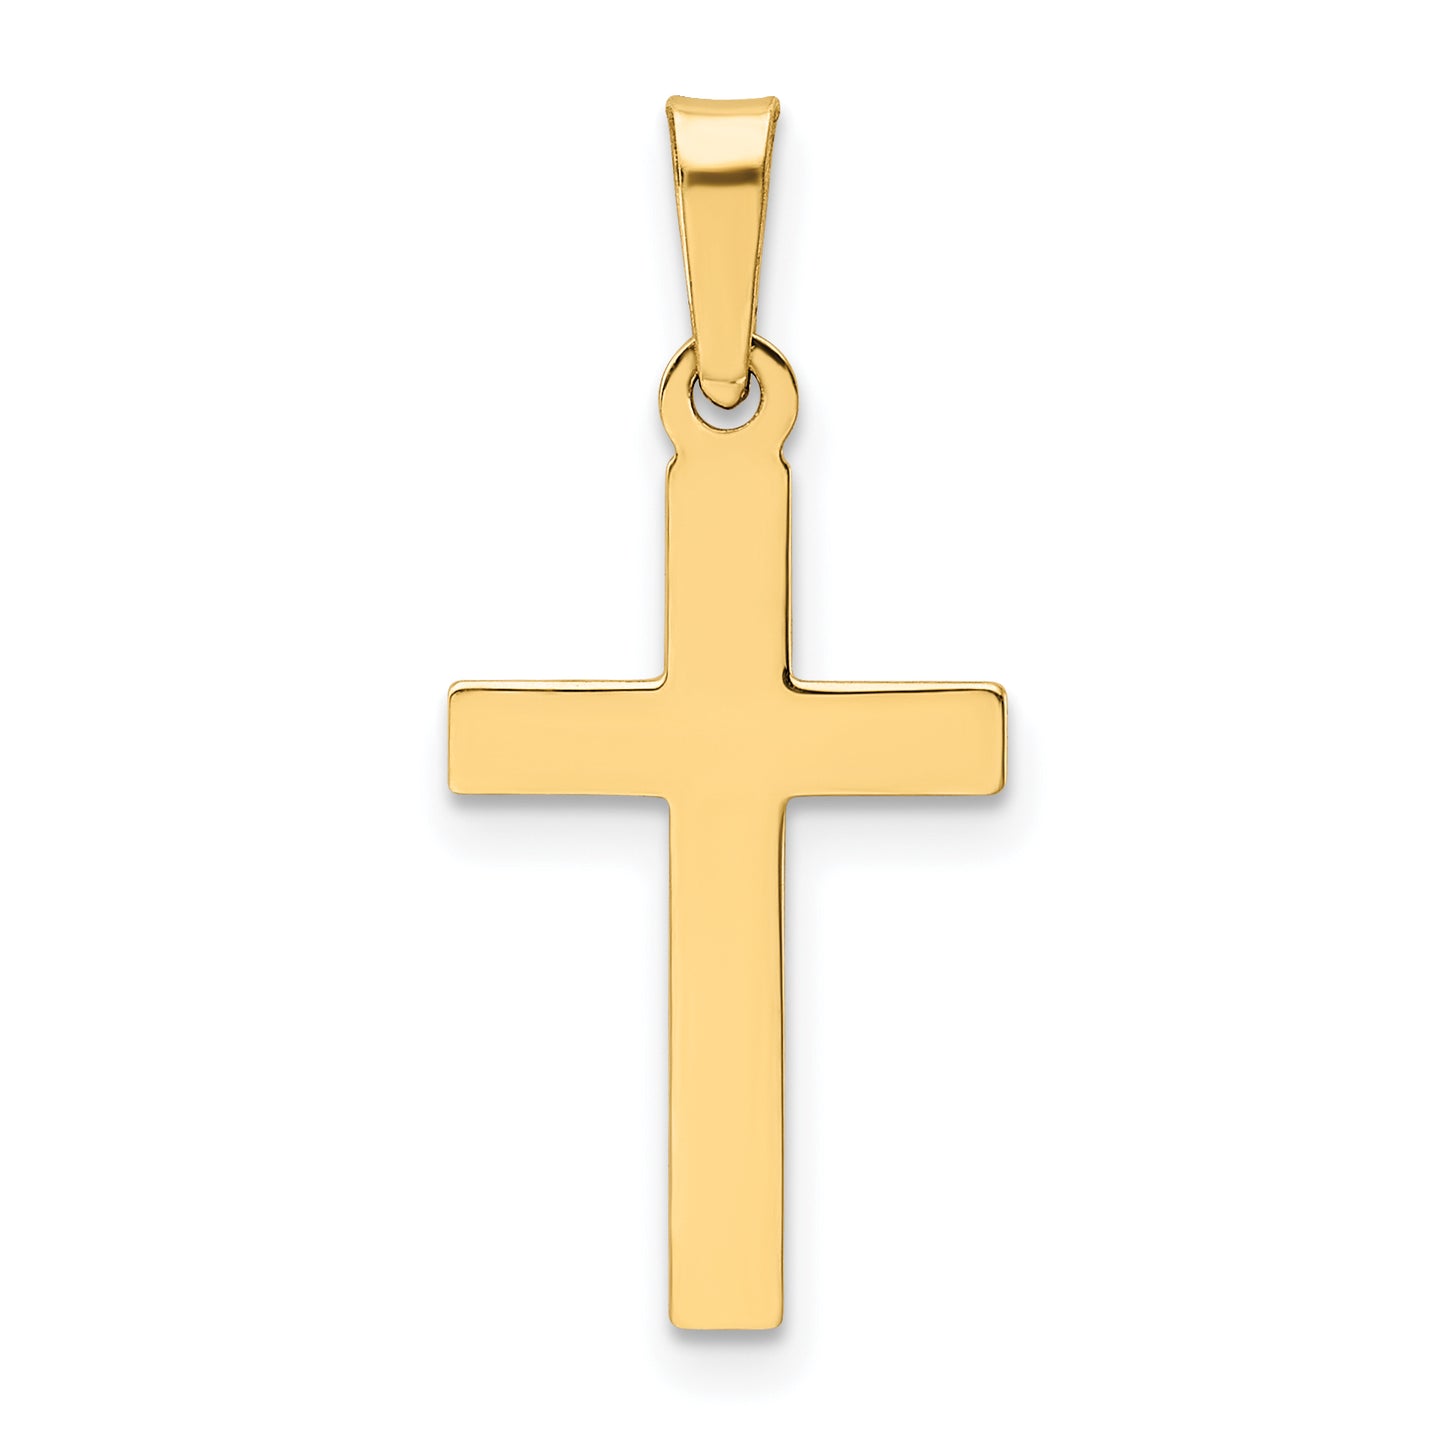 14k Polished Latin Cross Pendant